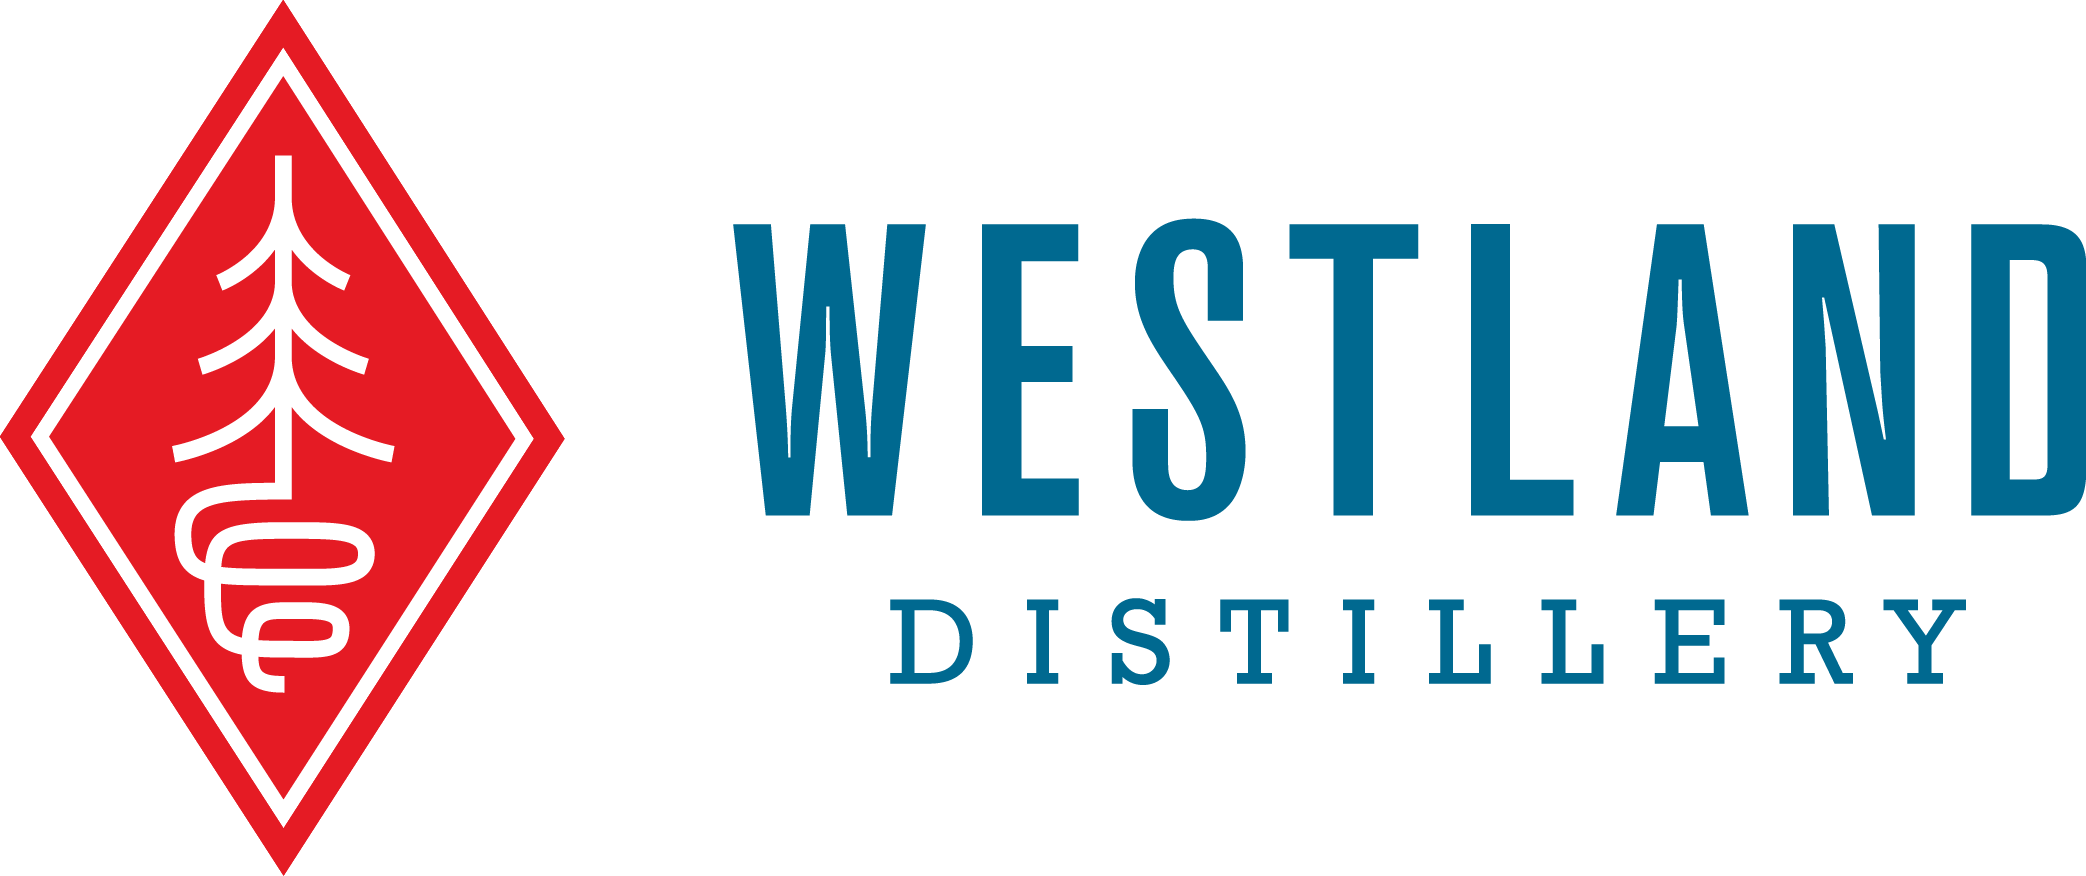 Westland Distillery